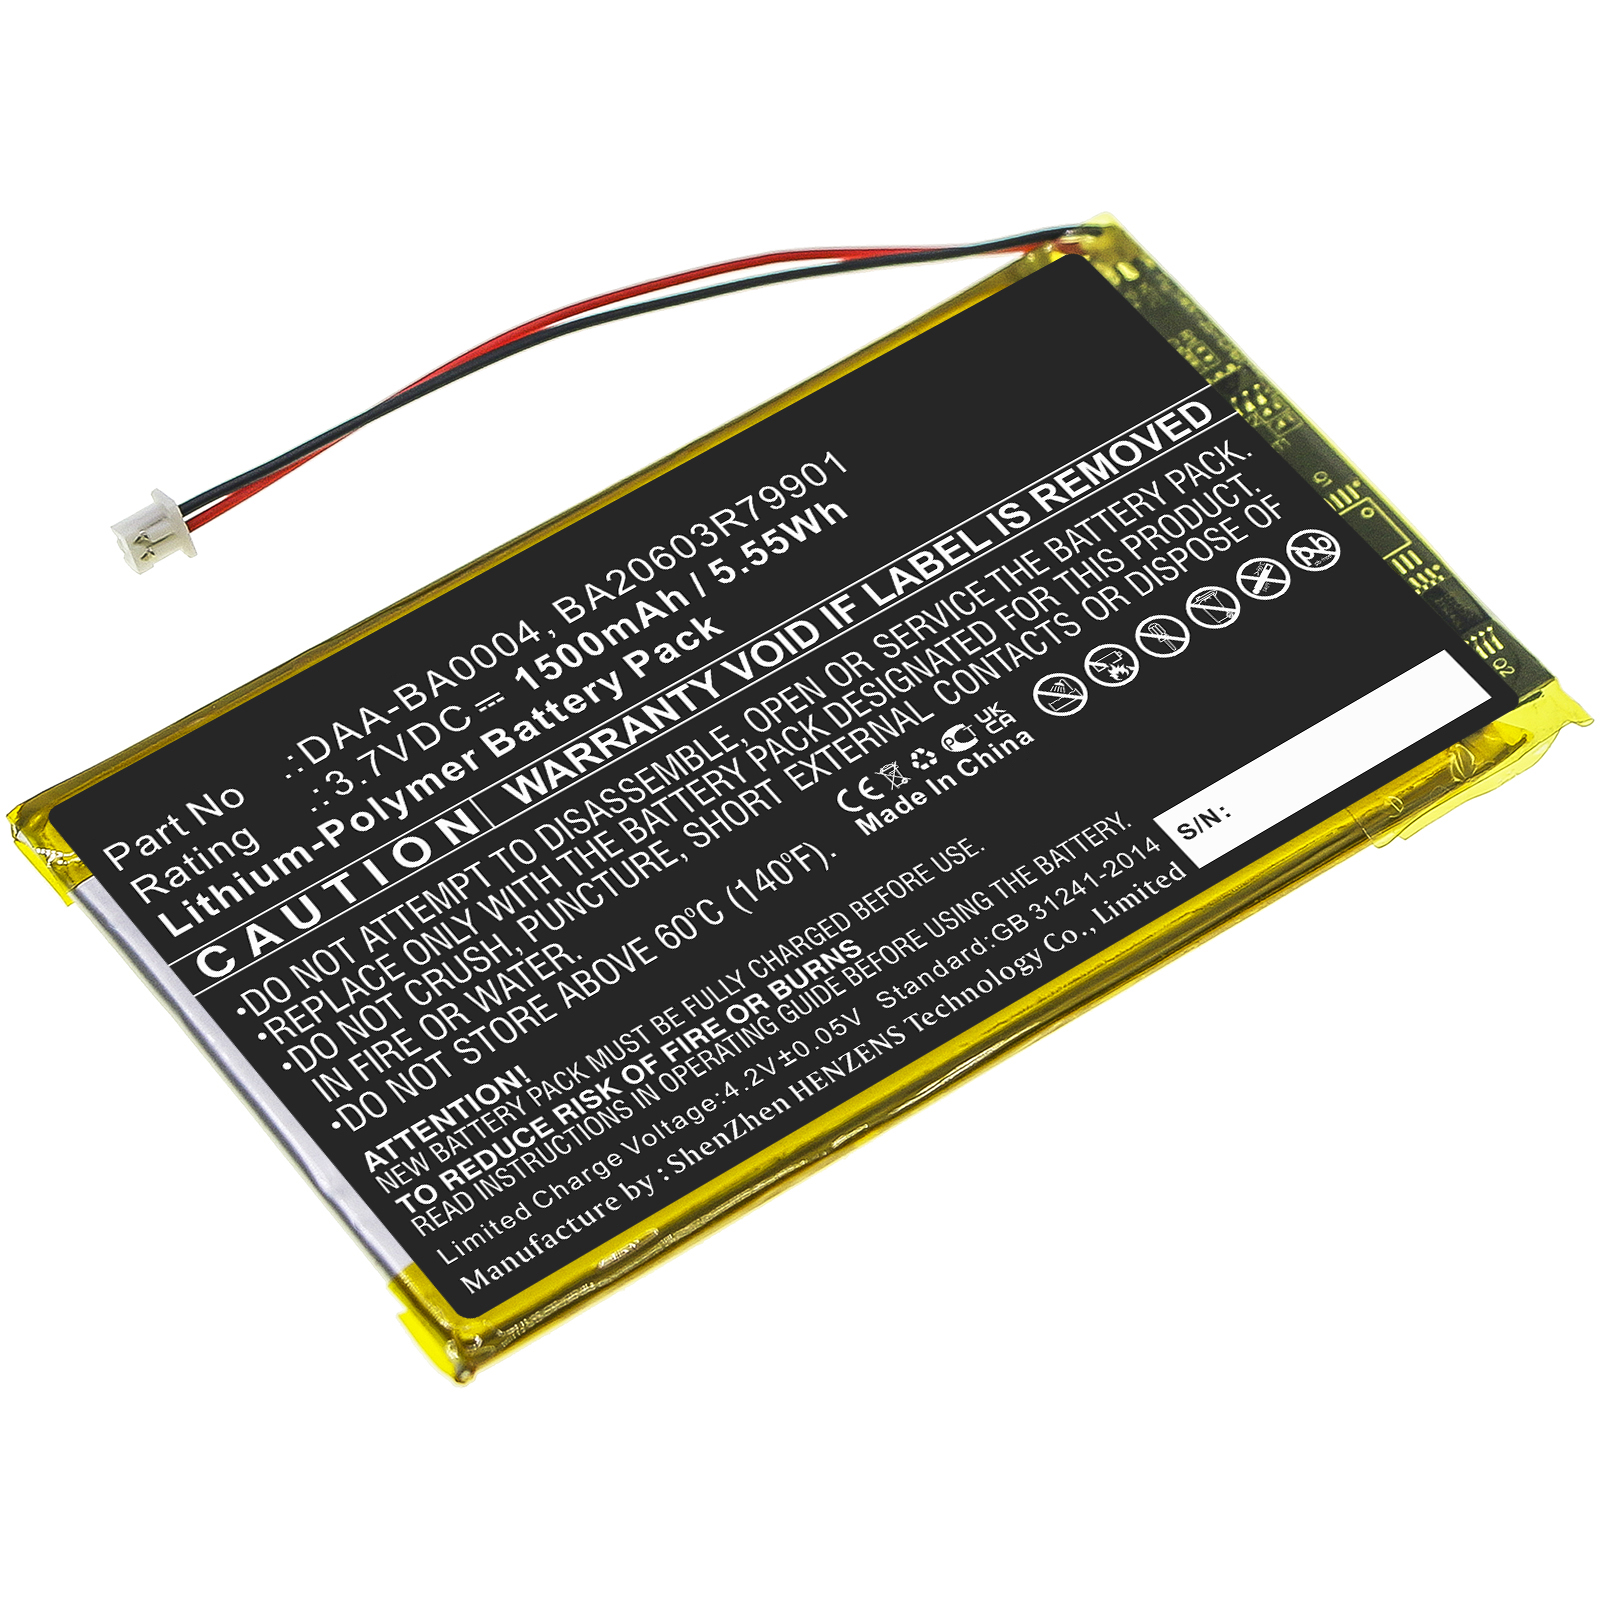 Synergy Digital Player Battery, Compatible with Creative BA20603R79901, DAA-BA0004 Player Battery (3.7, Li-Polymer, 1500mAh)